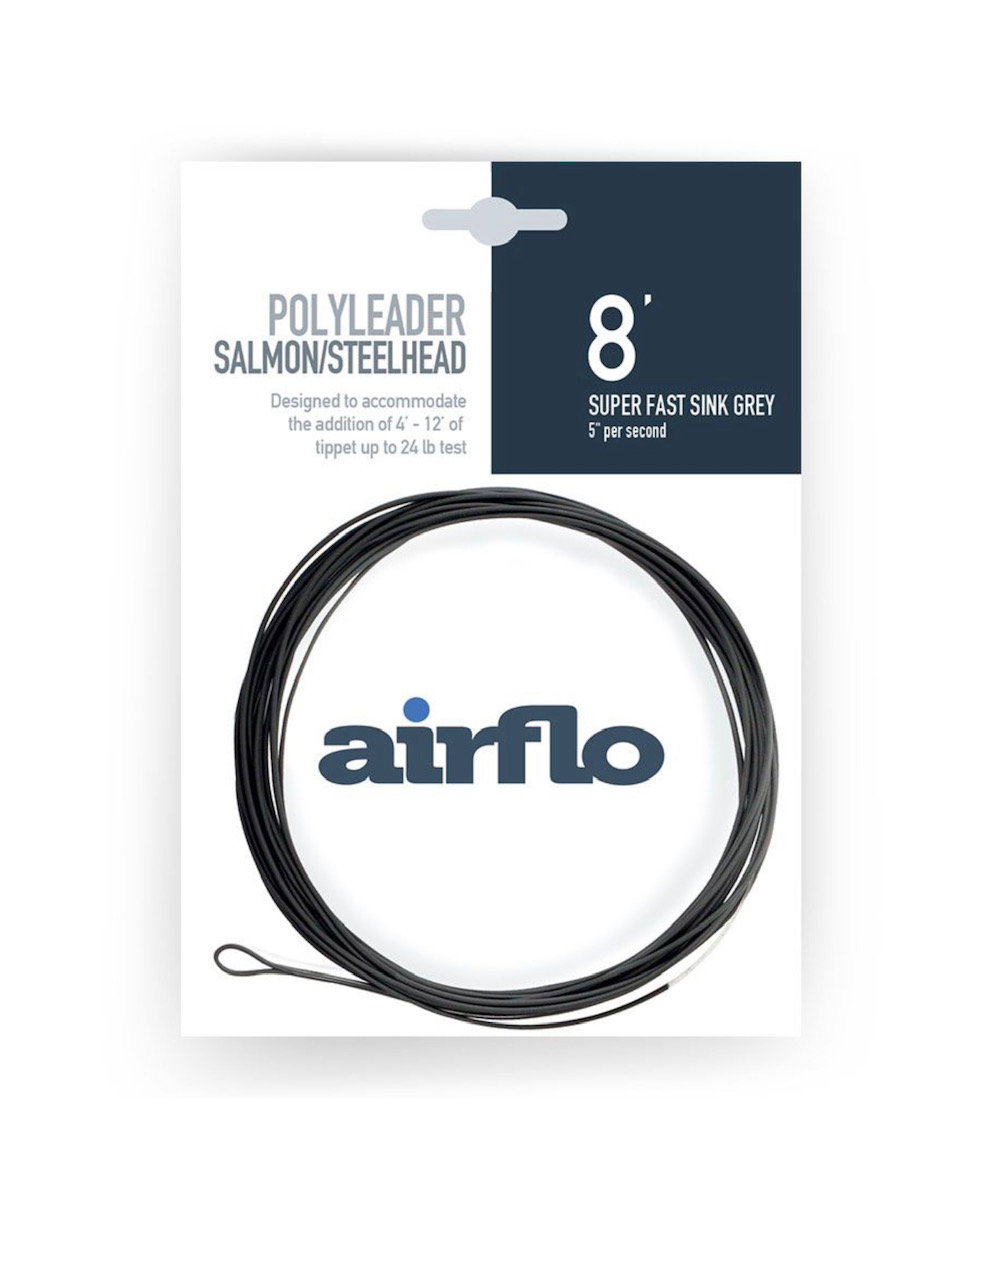 Airflo Polyleader Salmon/Steelhead  - 14' - Super Fast Sink Grey (5ips)